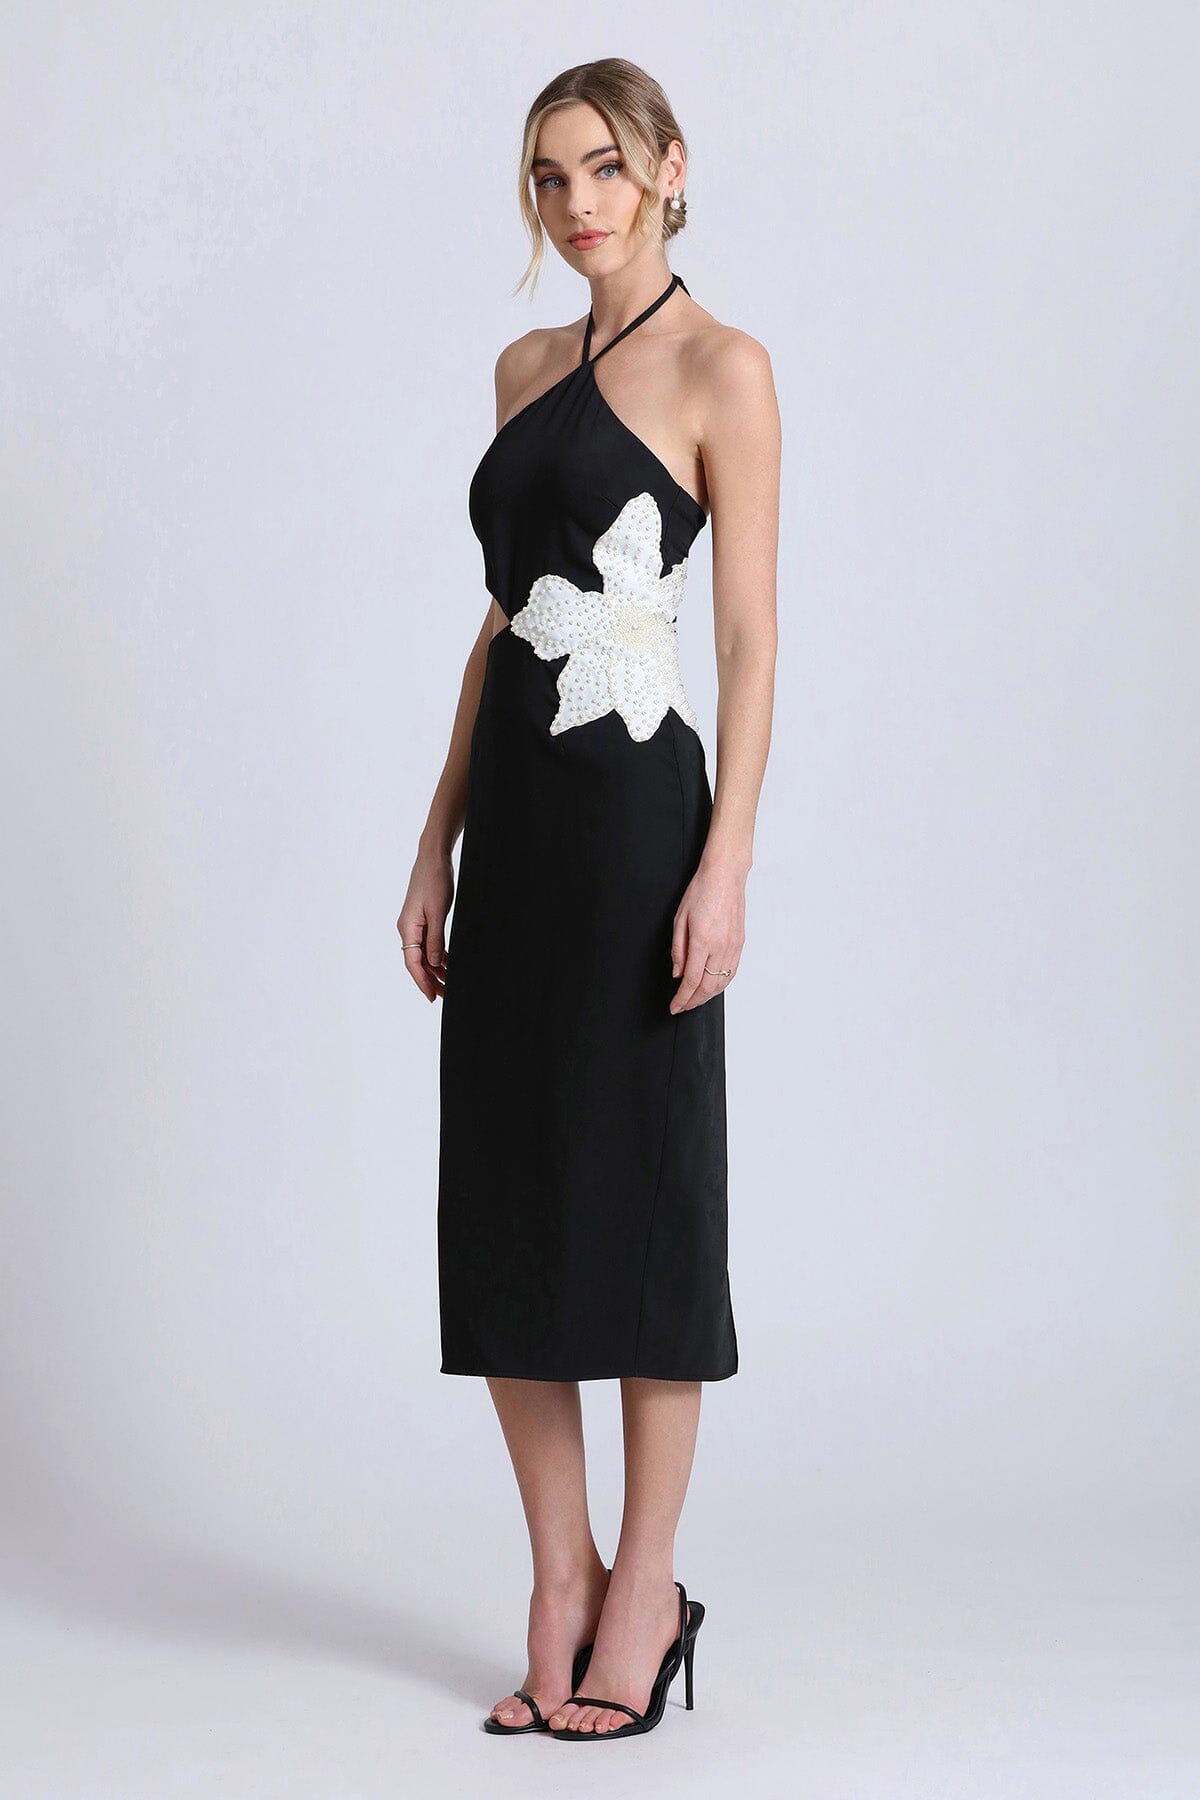 White flower embellished cut-out black halter dress - figure flattering elegant birthday party dresses for ladies by Avec Les Filles